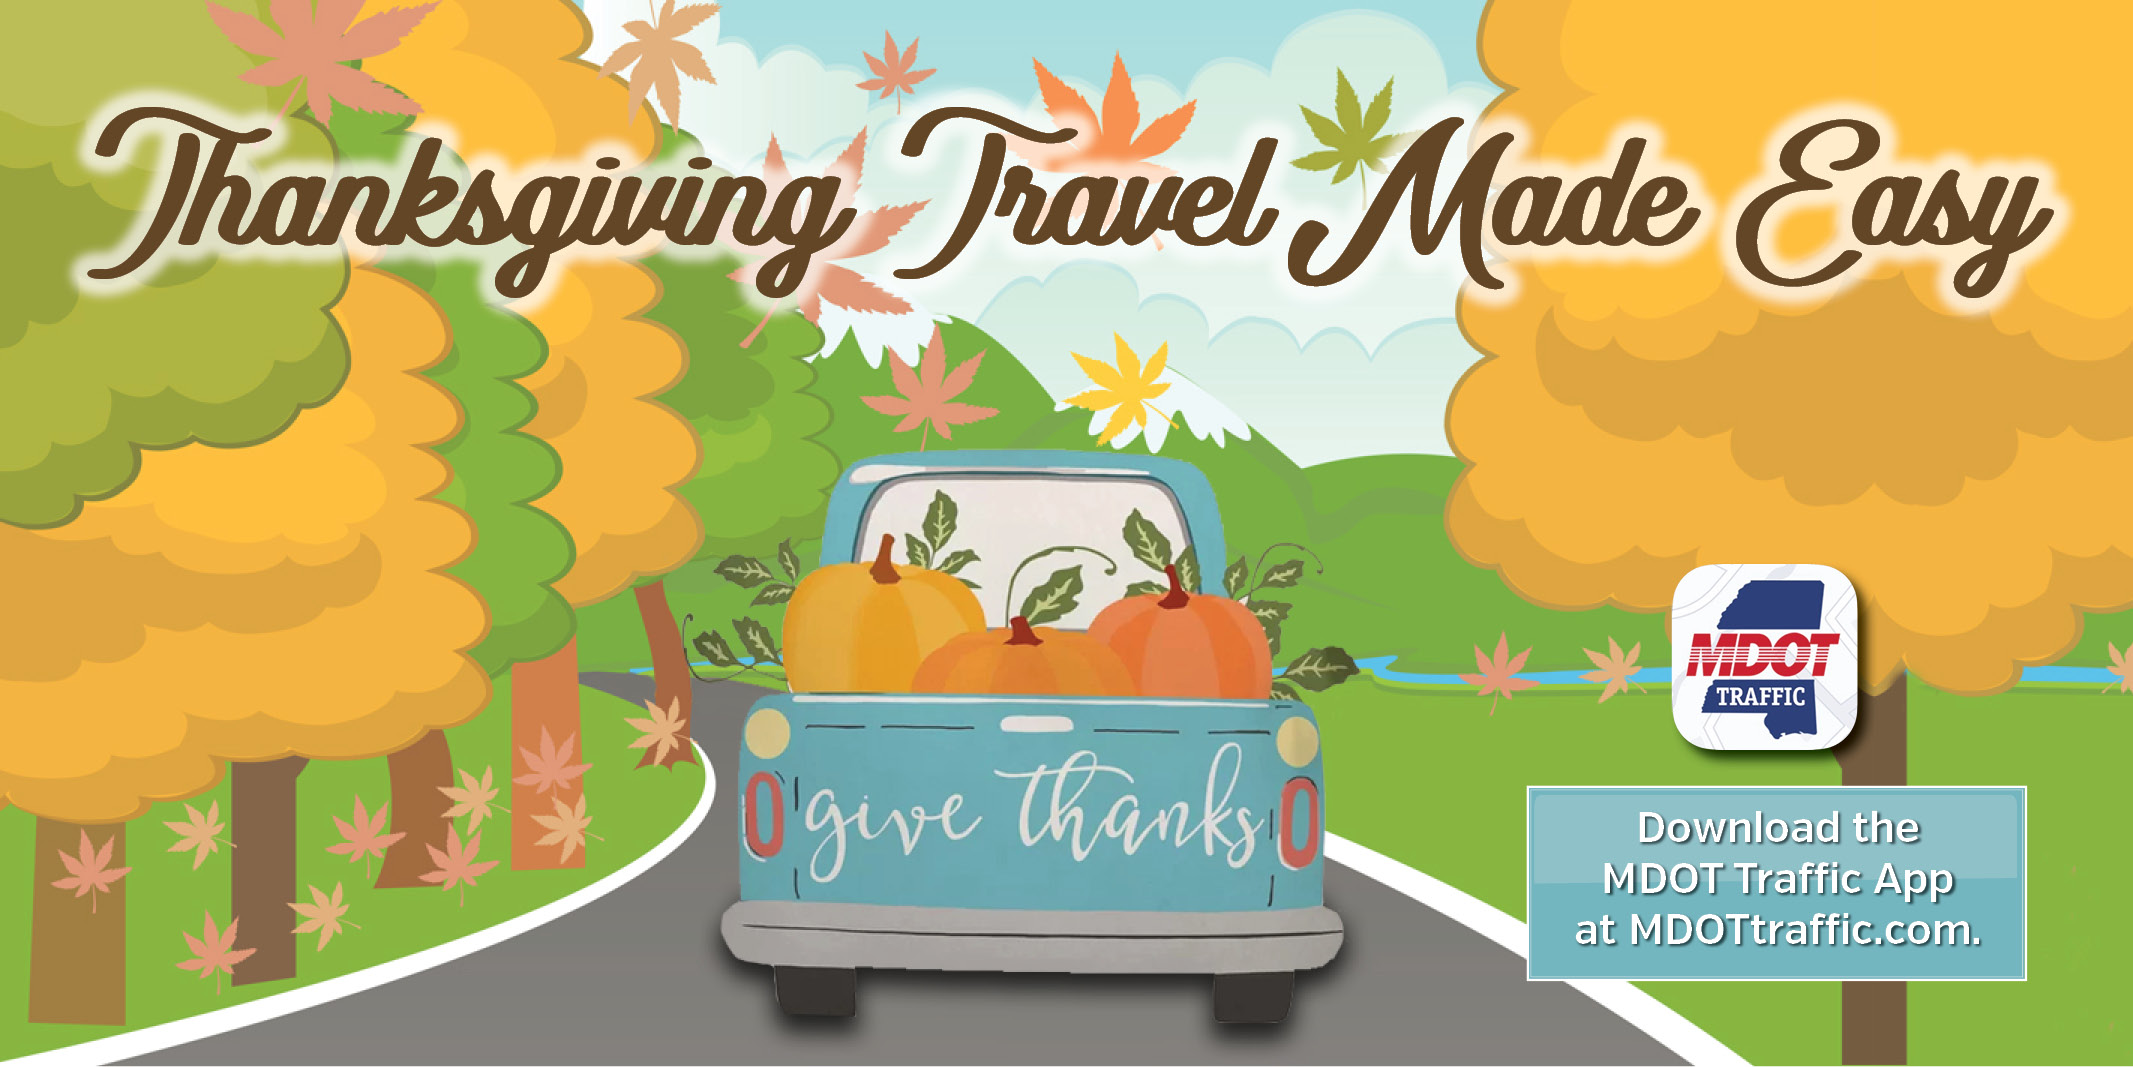 MDOT urges alert Thanksgiving weekend travel